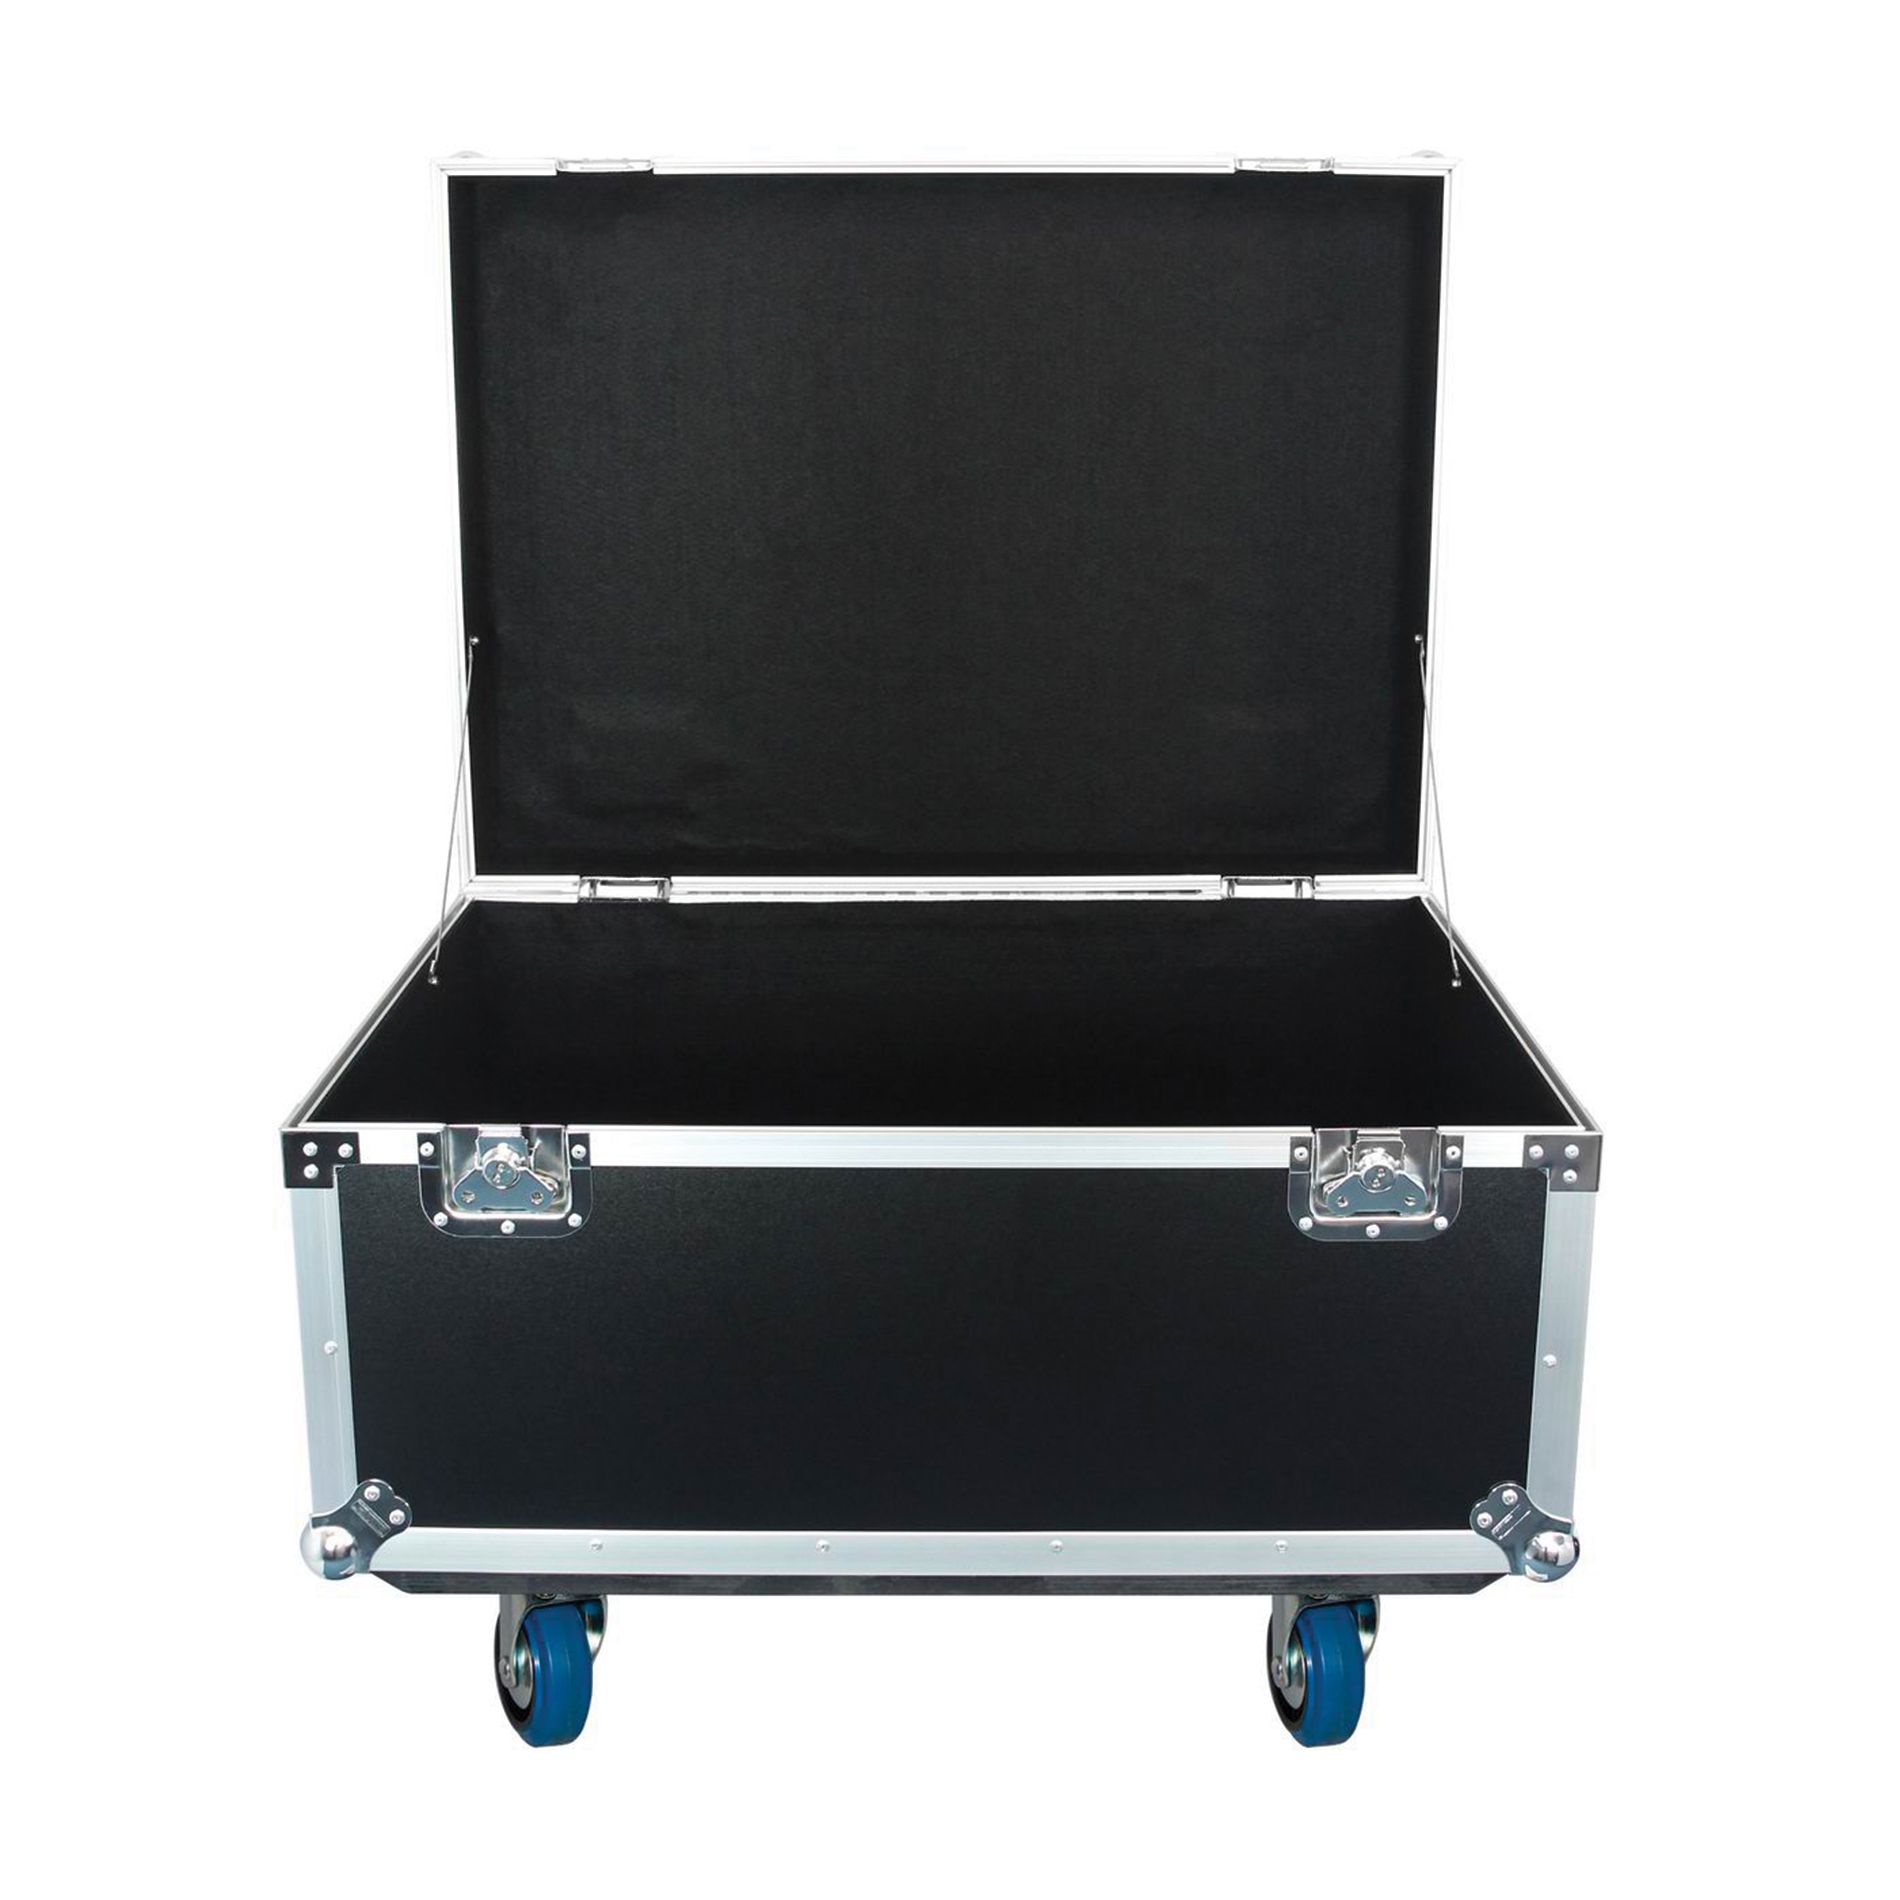 Power Acoustics Flight Case Utilitaire Multi-usages Avec Roues + Coupelles - Bag & flightcase for lighting equipment - Variation 1